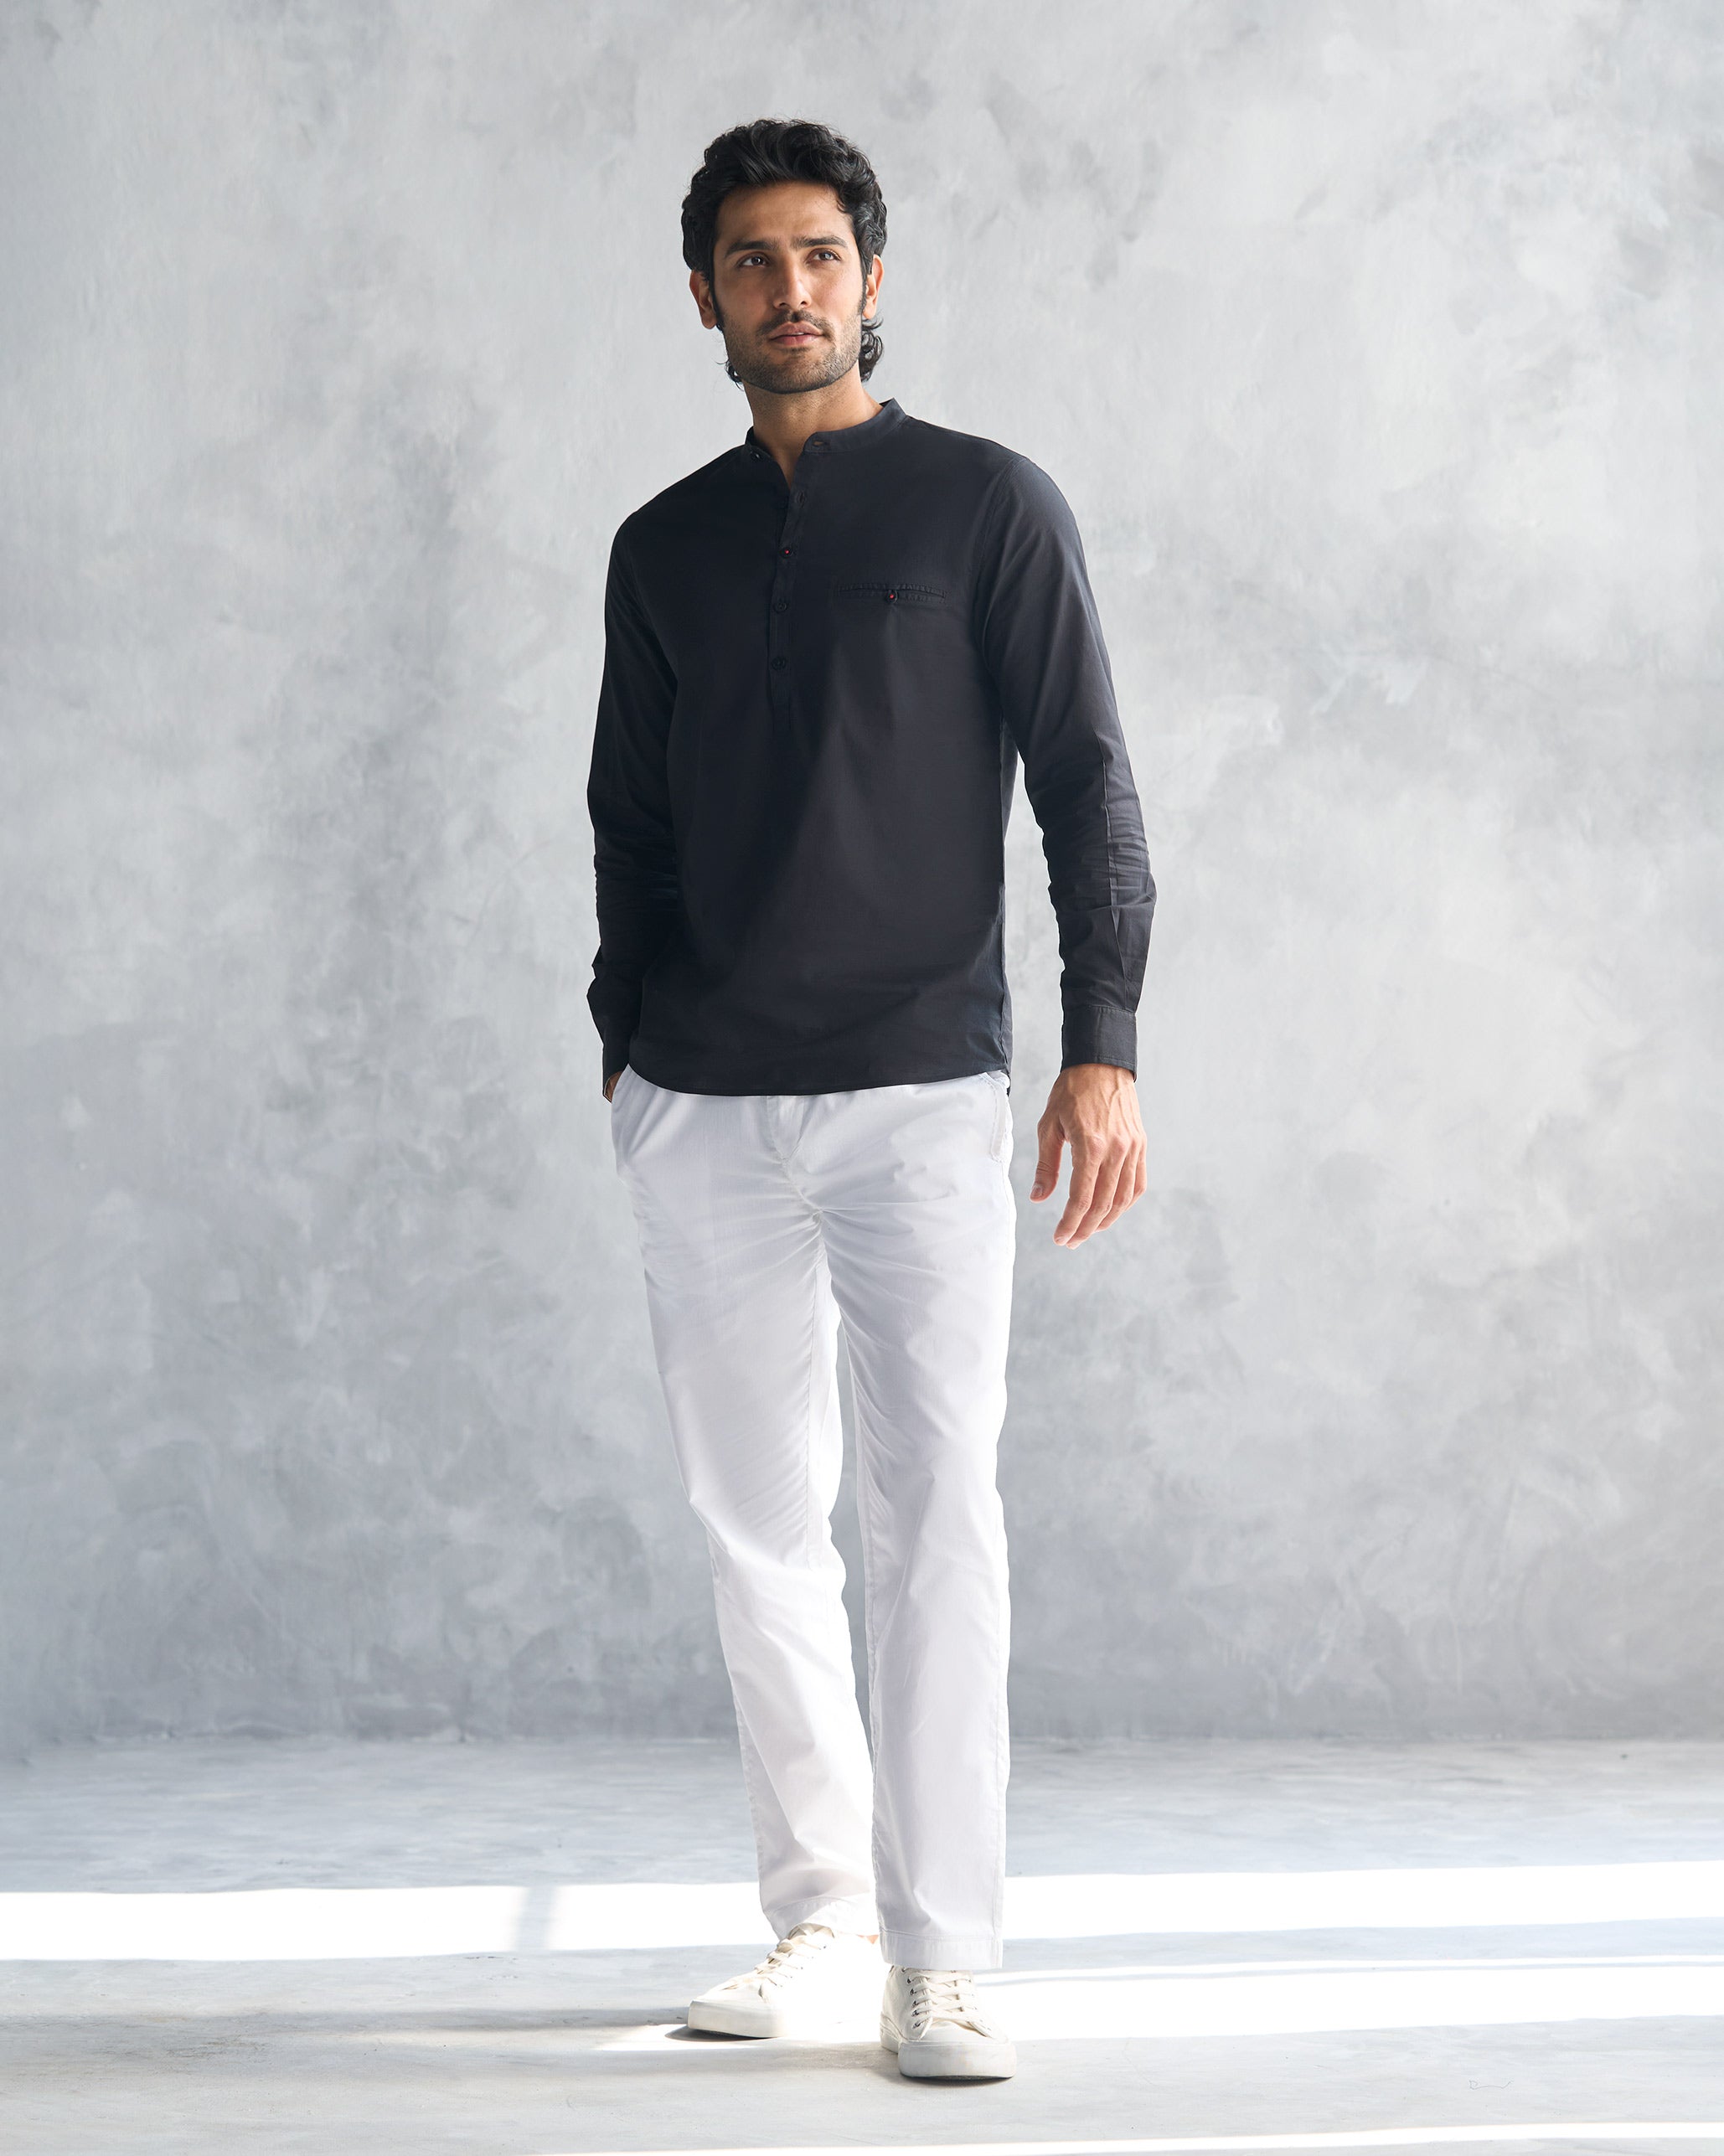 Pondicherry Shirt - Black